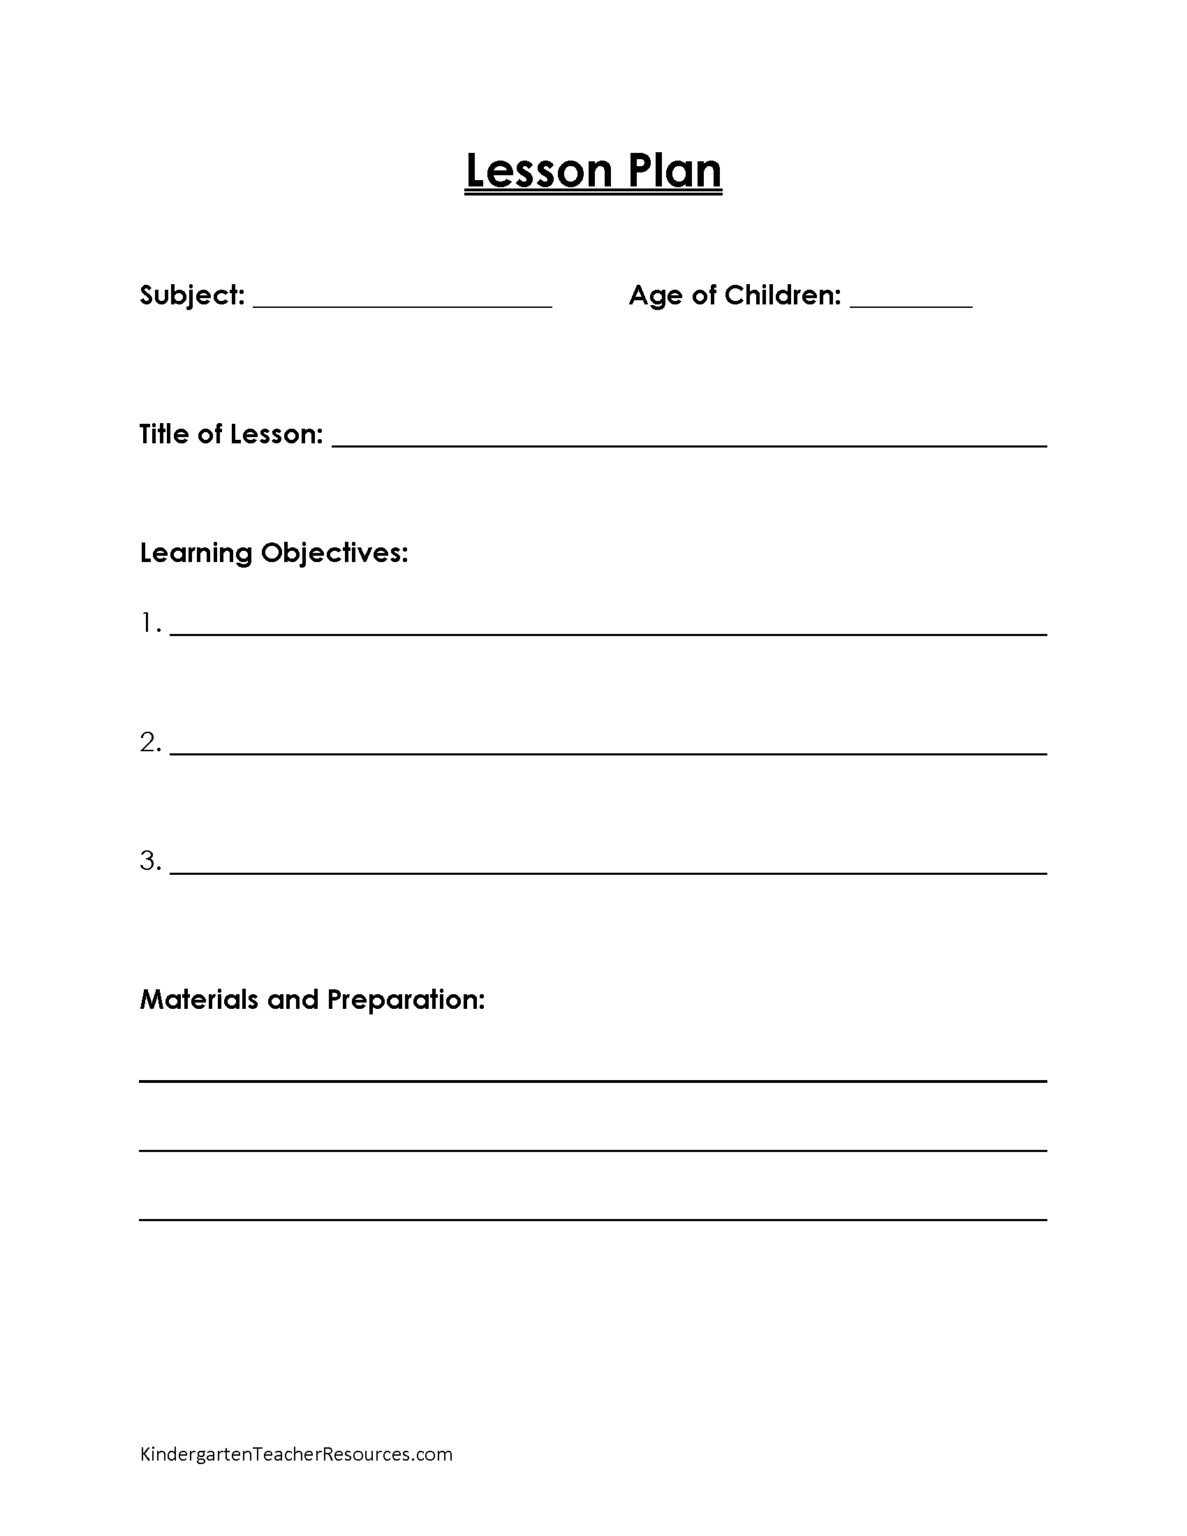 free-kindergarten-lesson-plan-template-word-or-editable-pdf